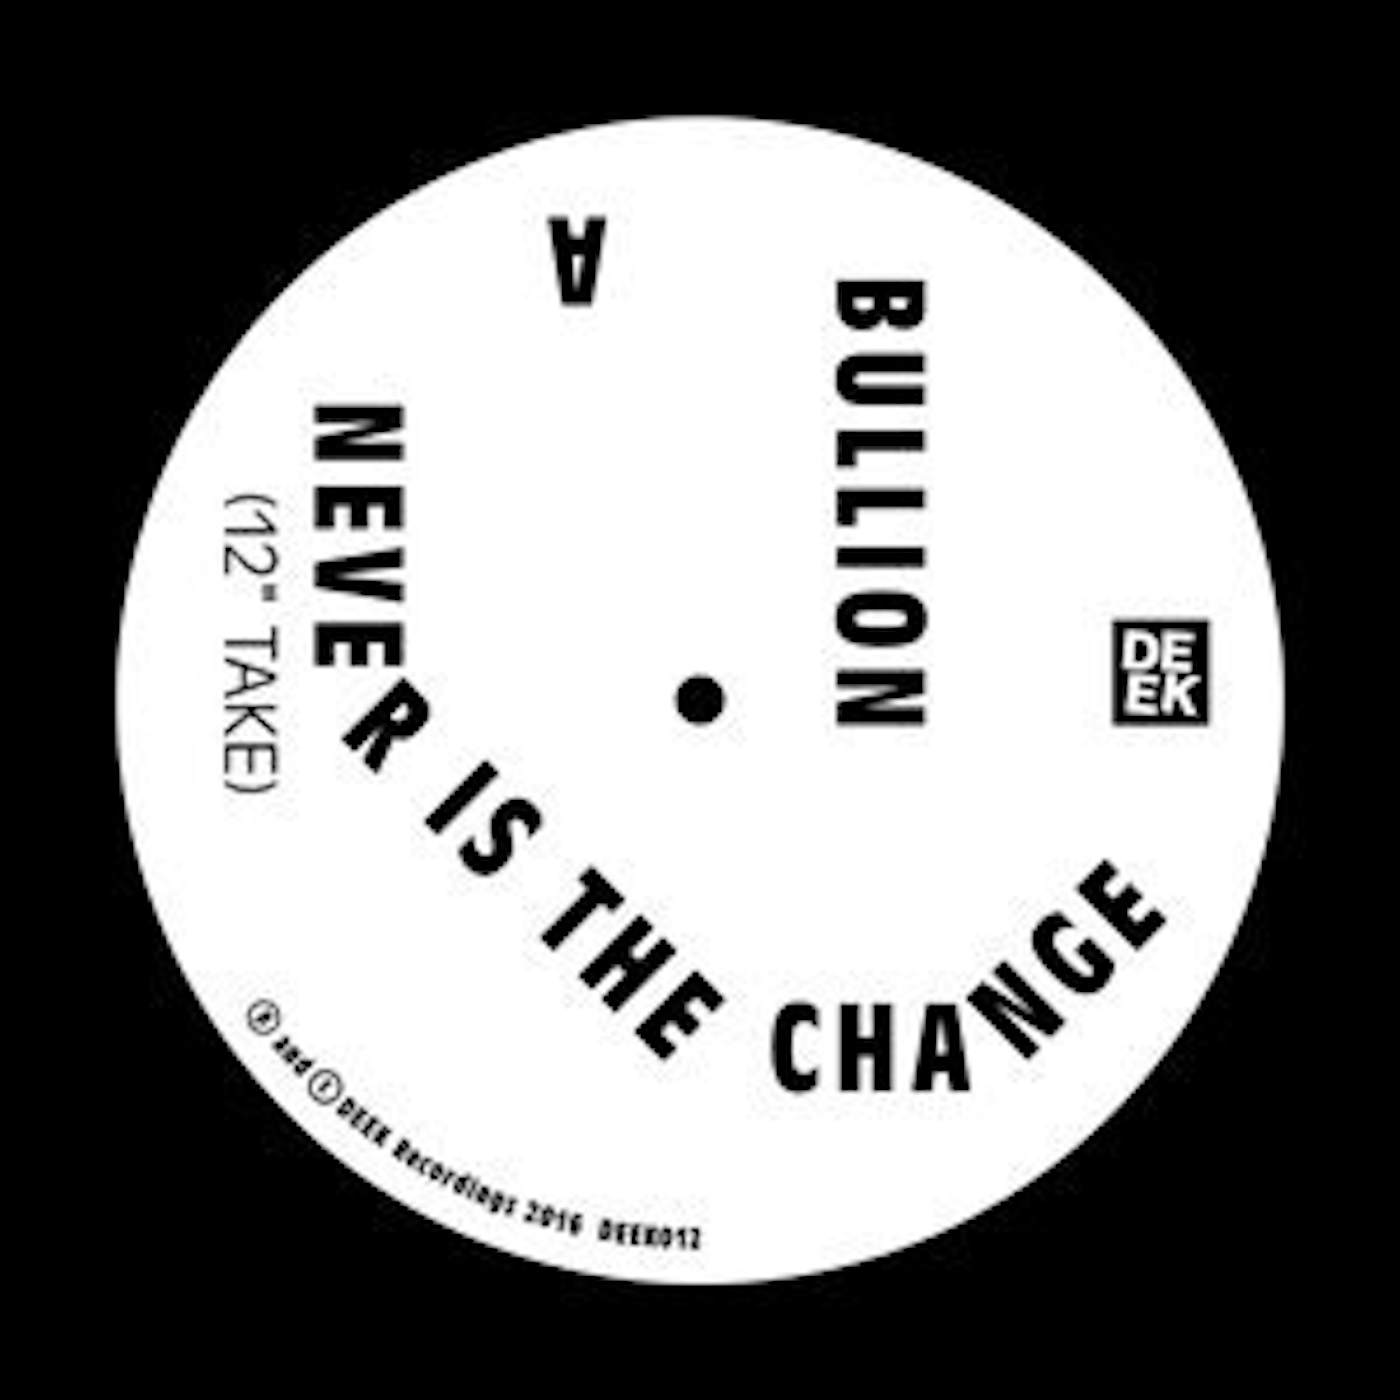 Bullion Never Is the Change Vinyl Record